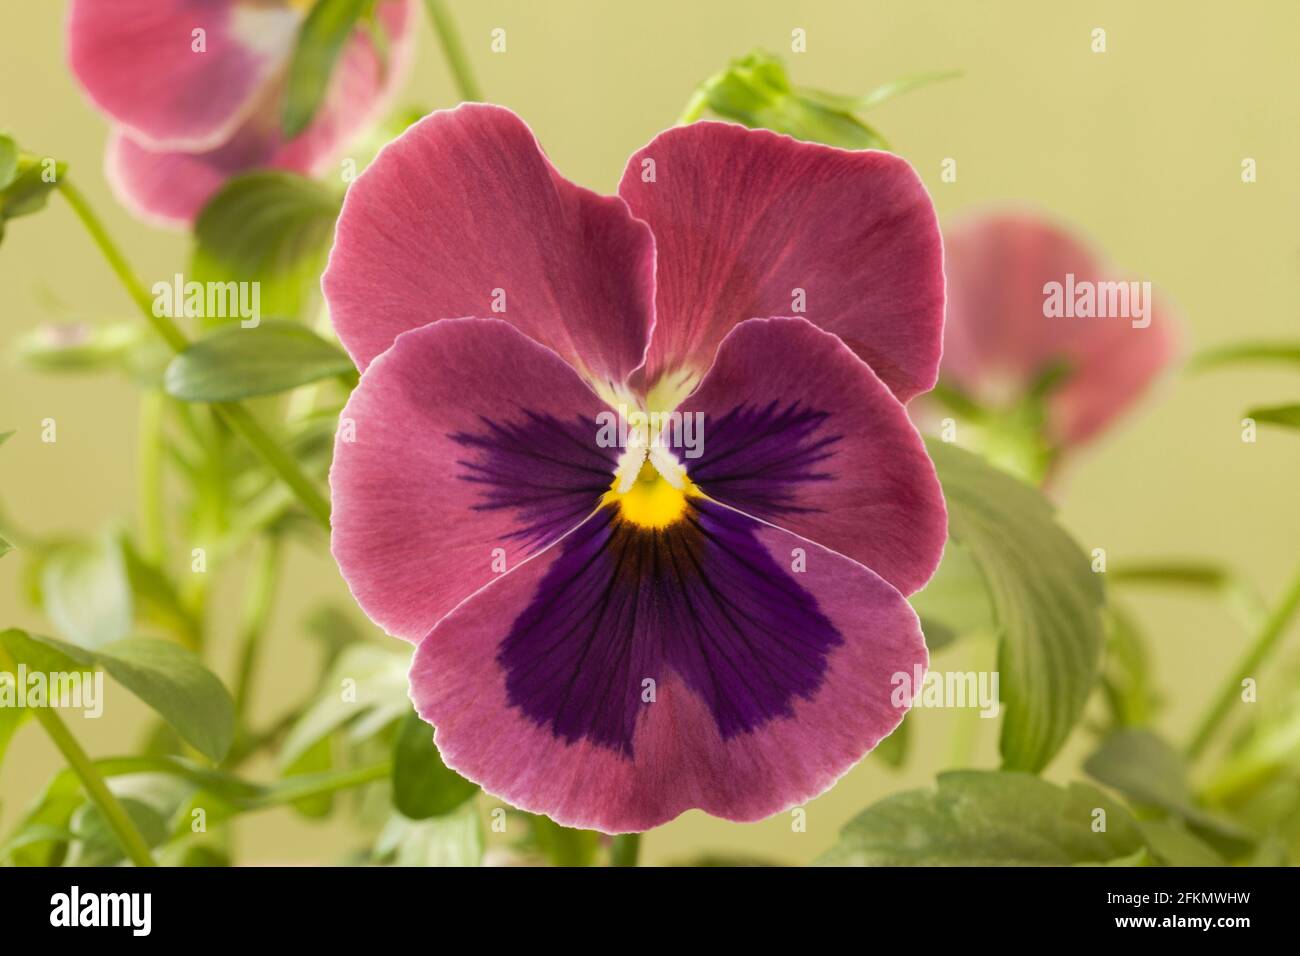 Carmine rose -Fotos und -Bildmaterial in hoher Auflösung – Alamy